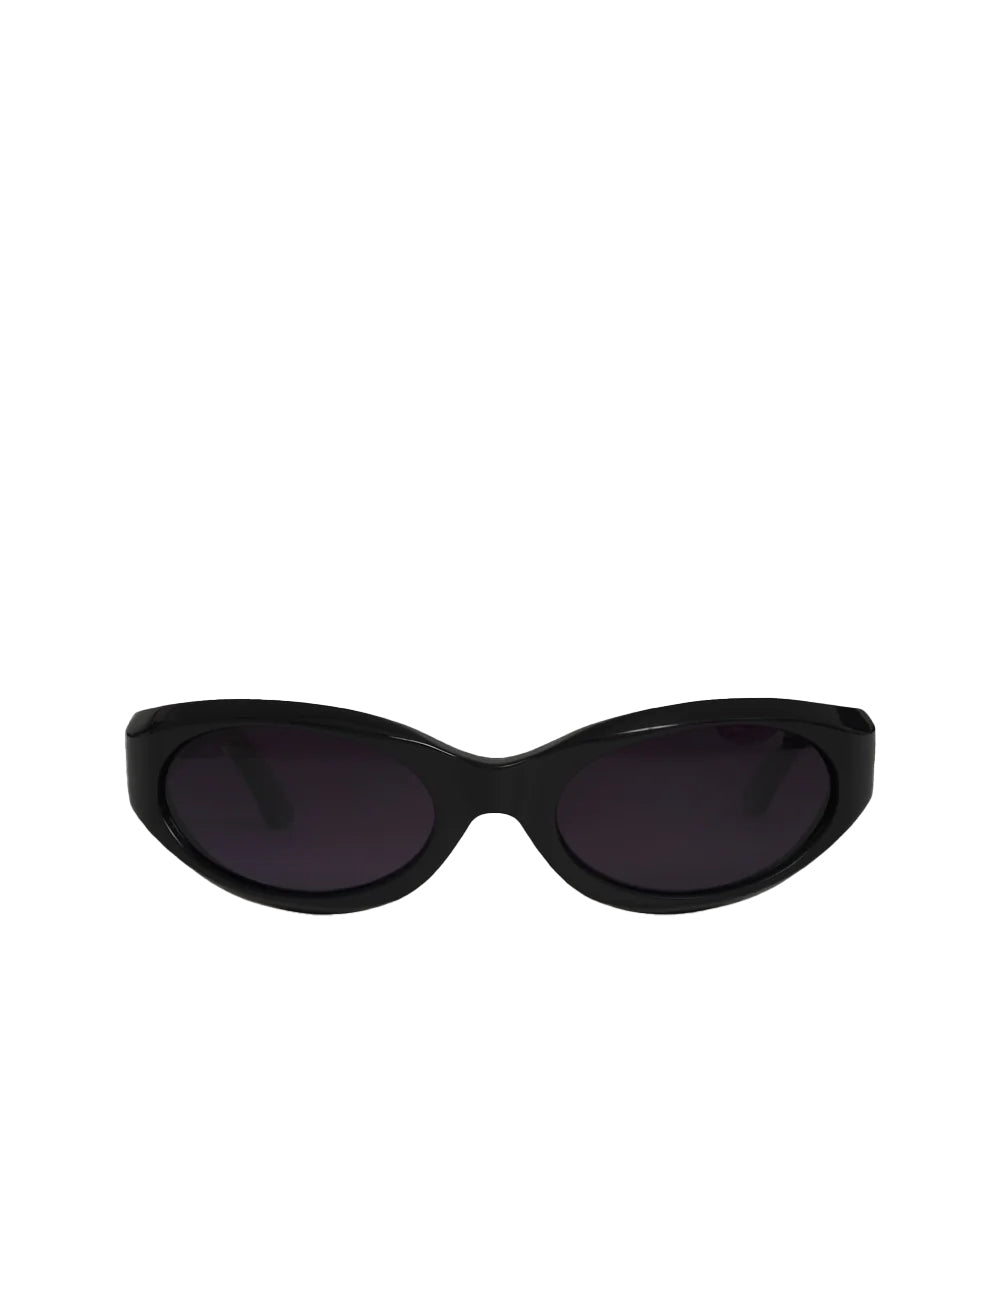 Berlin sunglasses, black